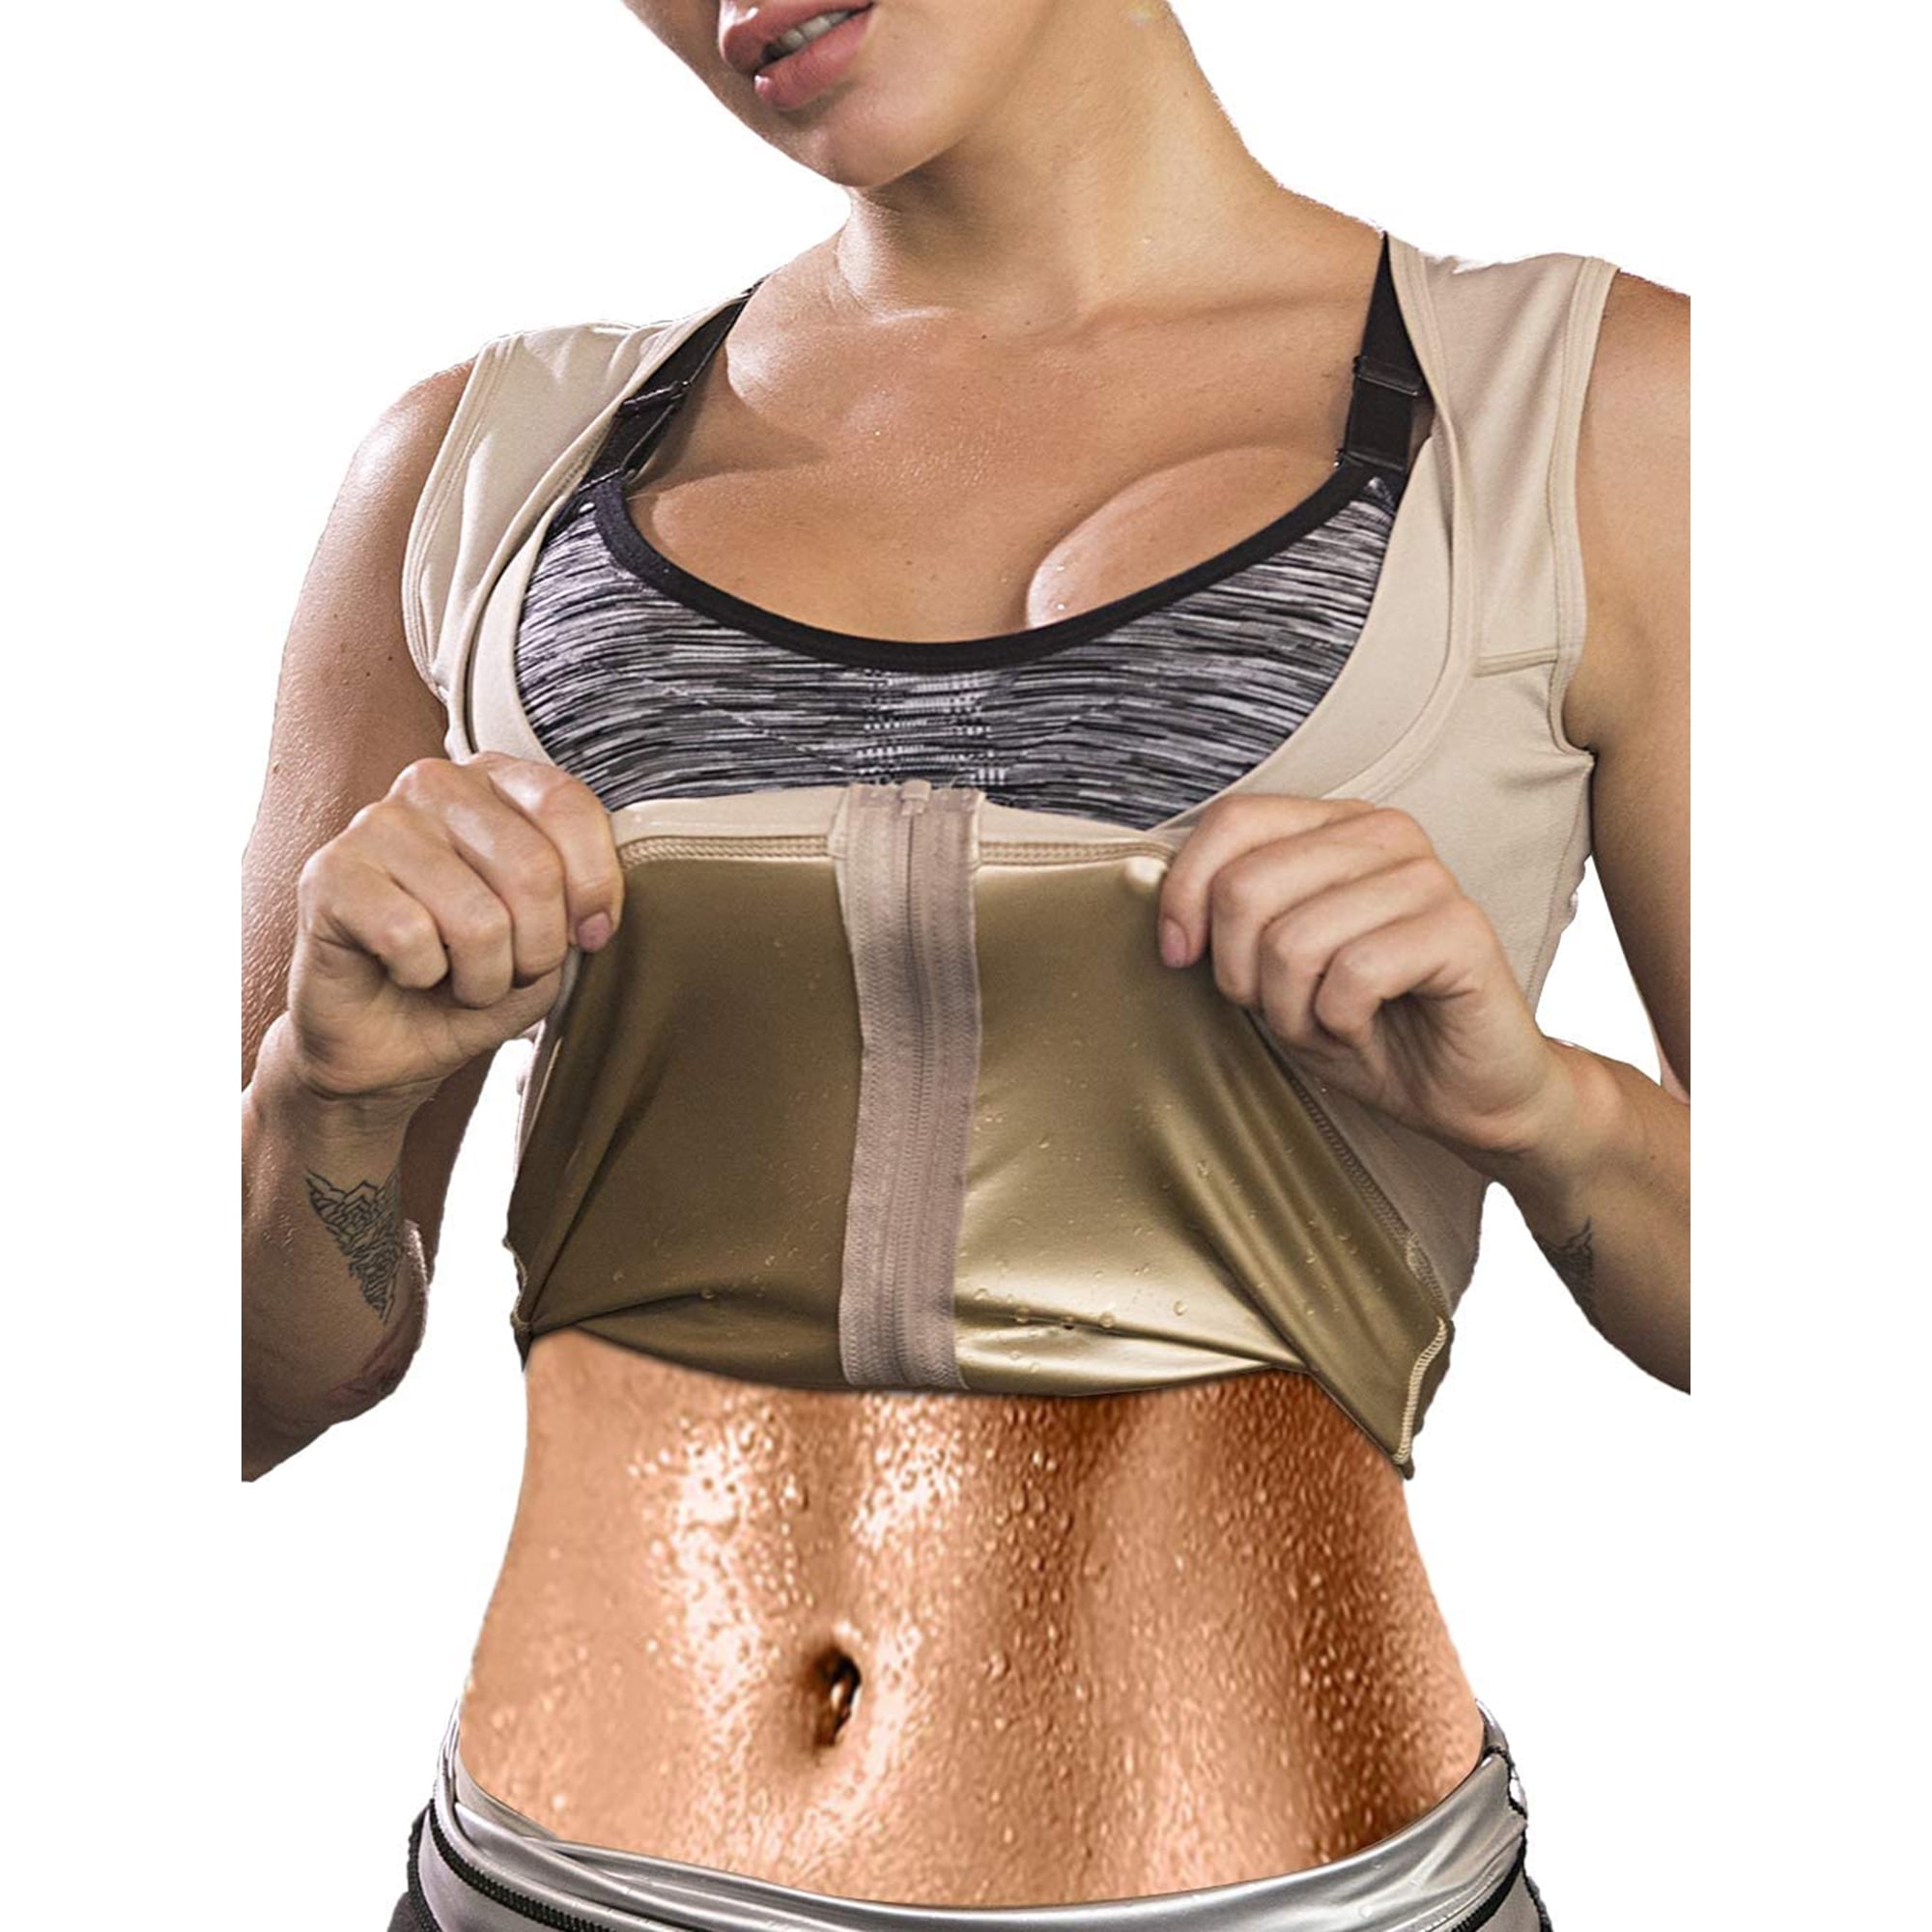 Thermo Suana Fat Burner Neoprene Body Shaper Slimming Waist Trainer Gym Vest Top 